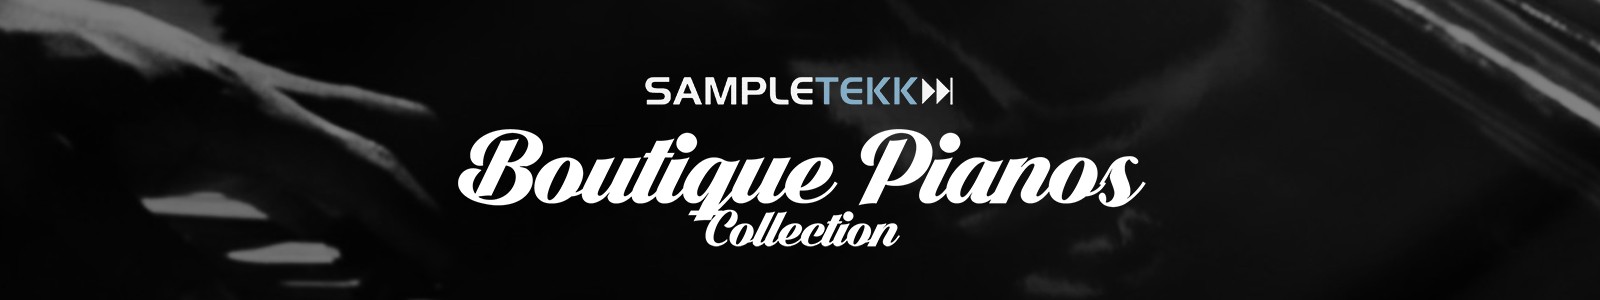 sampletekk pianos collection